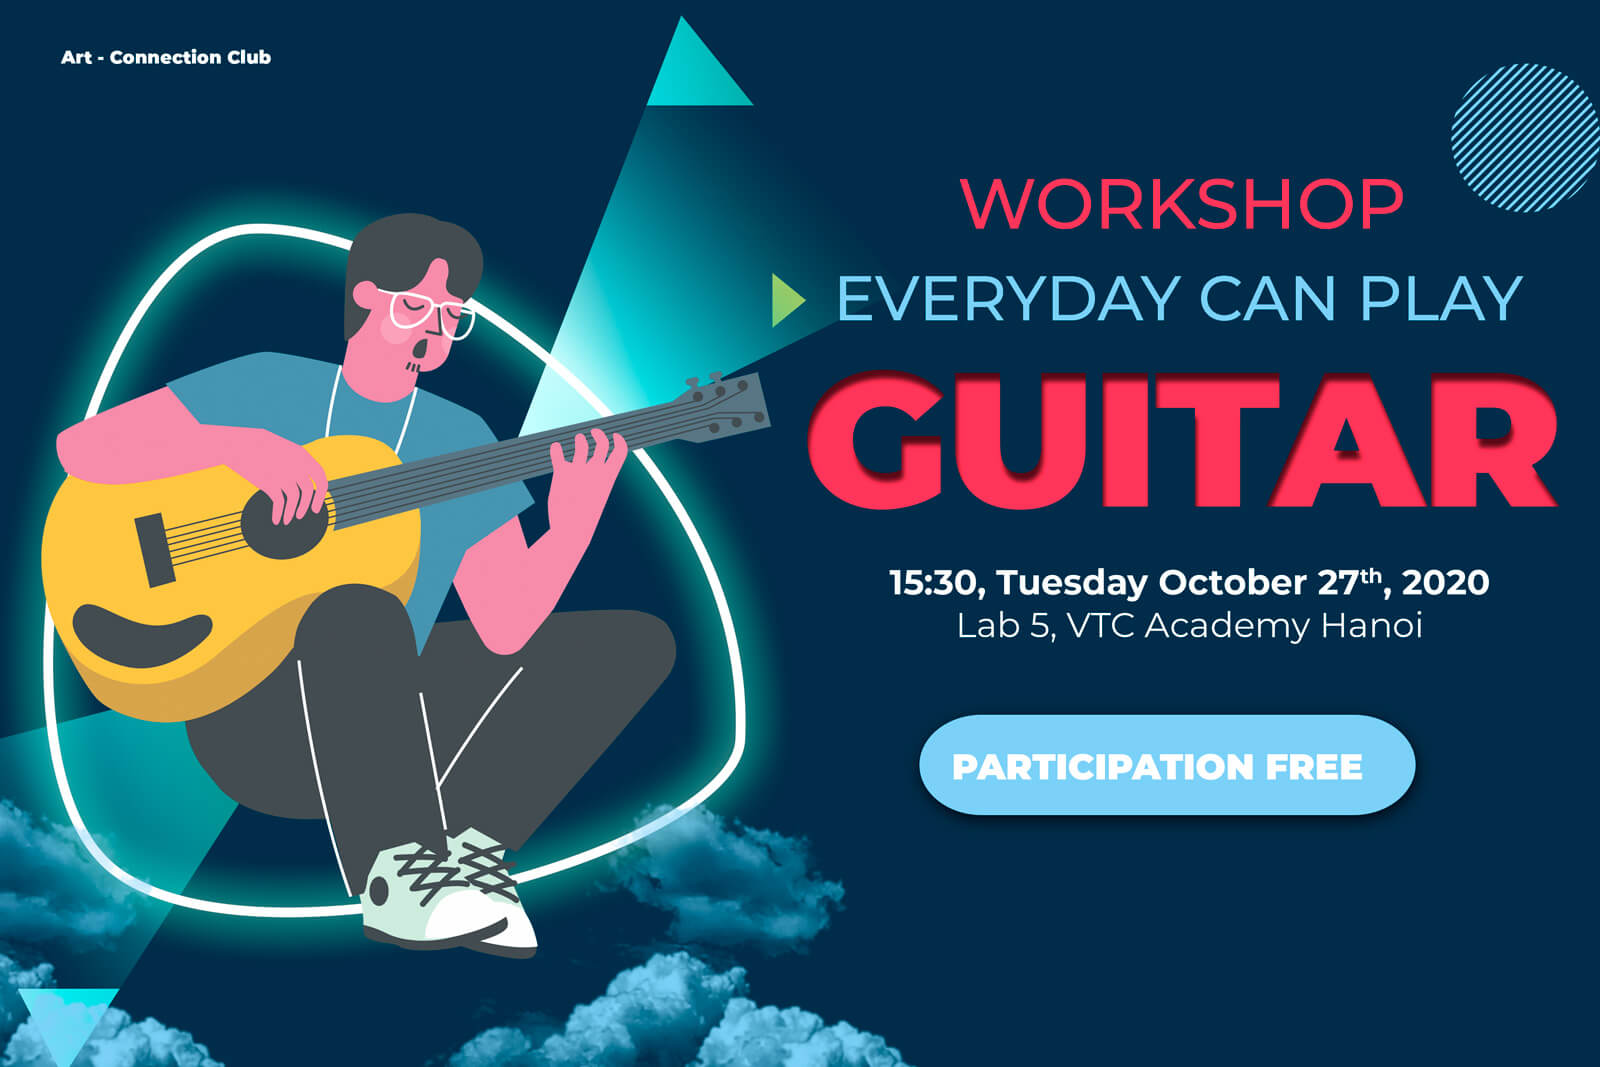 Workshop “Everyone can play guitar” at VTC Academy Hanoi